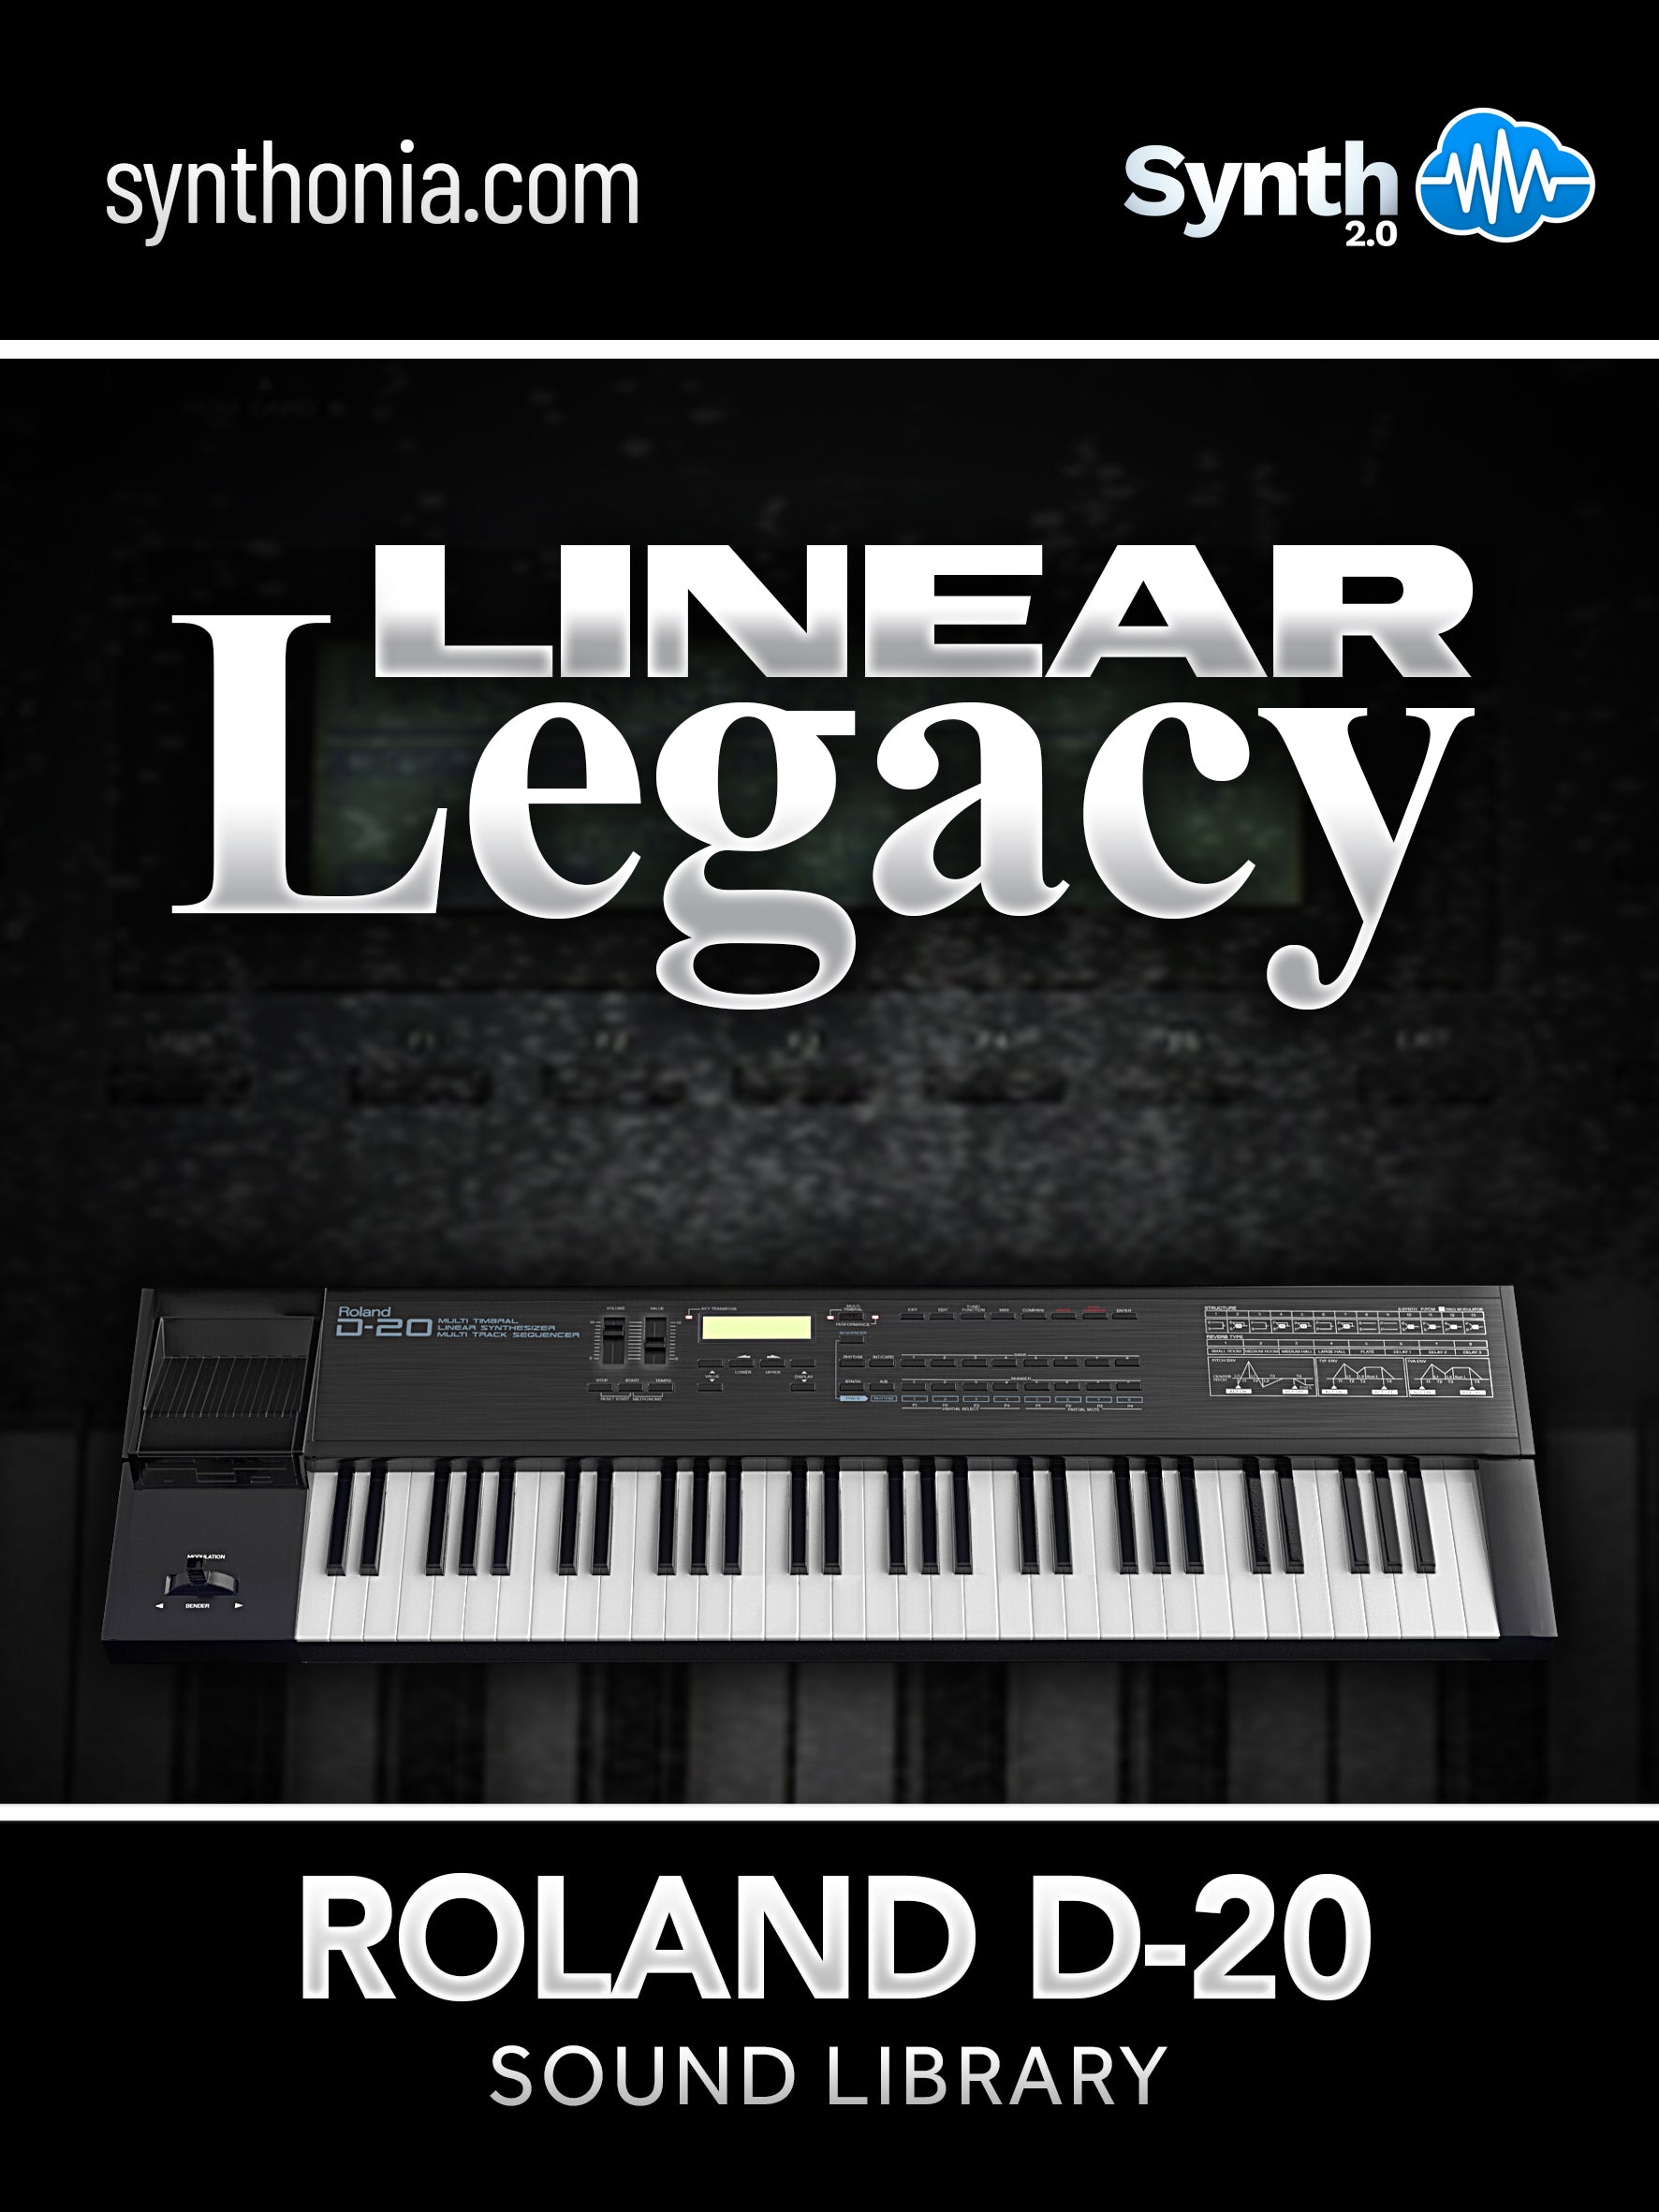 LFO160 - Linear Legacy - D-20 ( 64 presets )